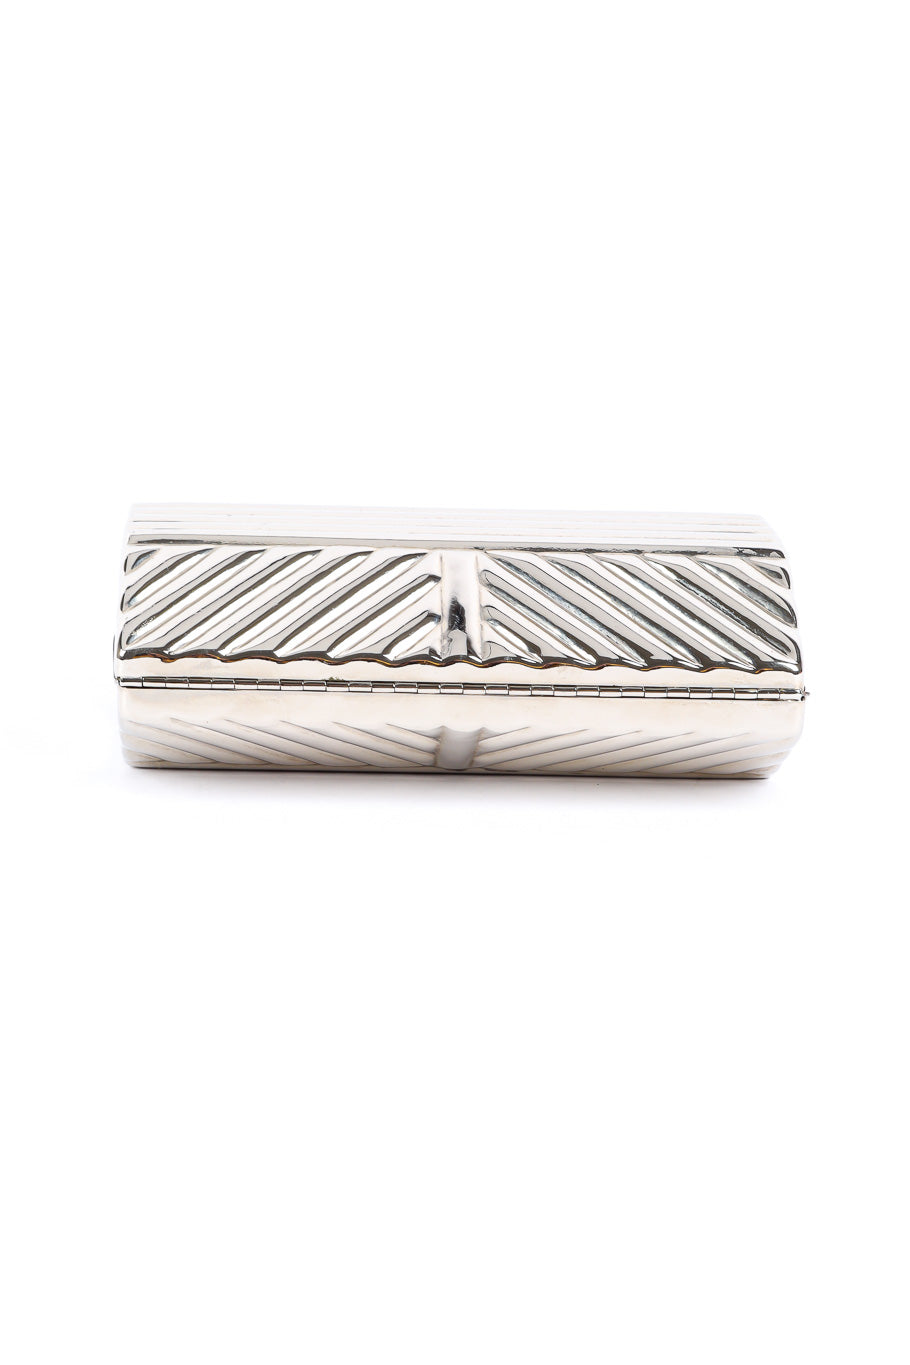 Saks Fifth Avenue metal silver clutch bottom details @recessla